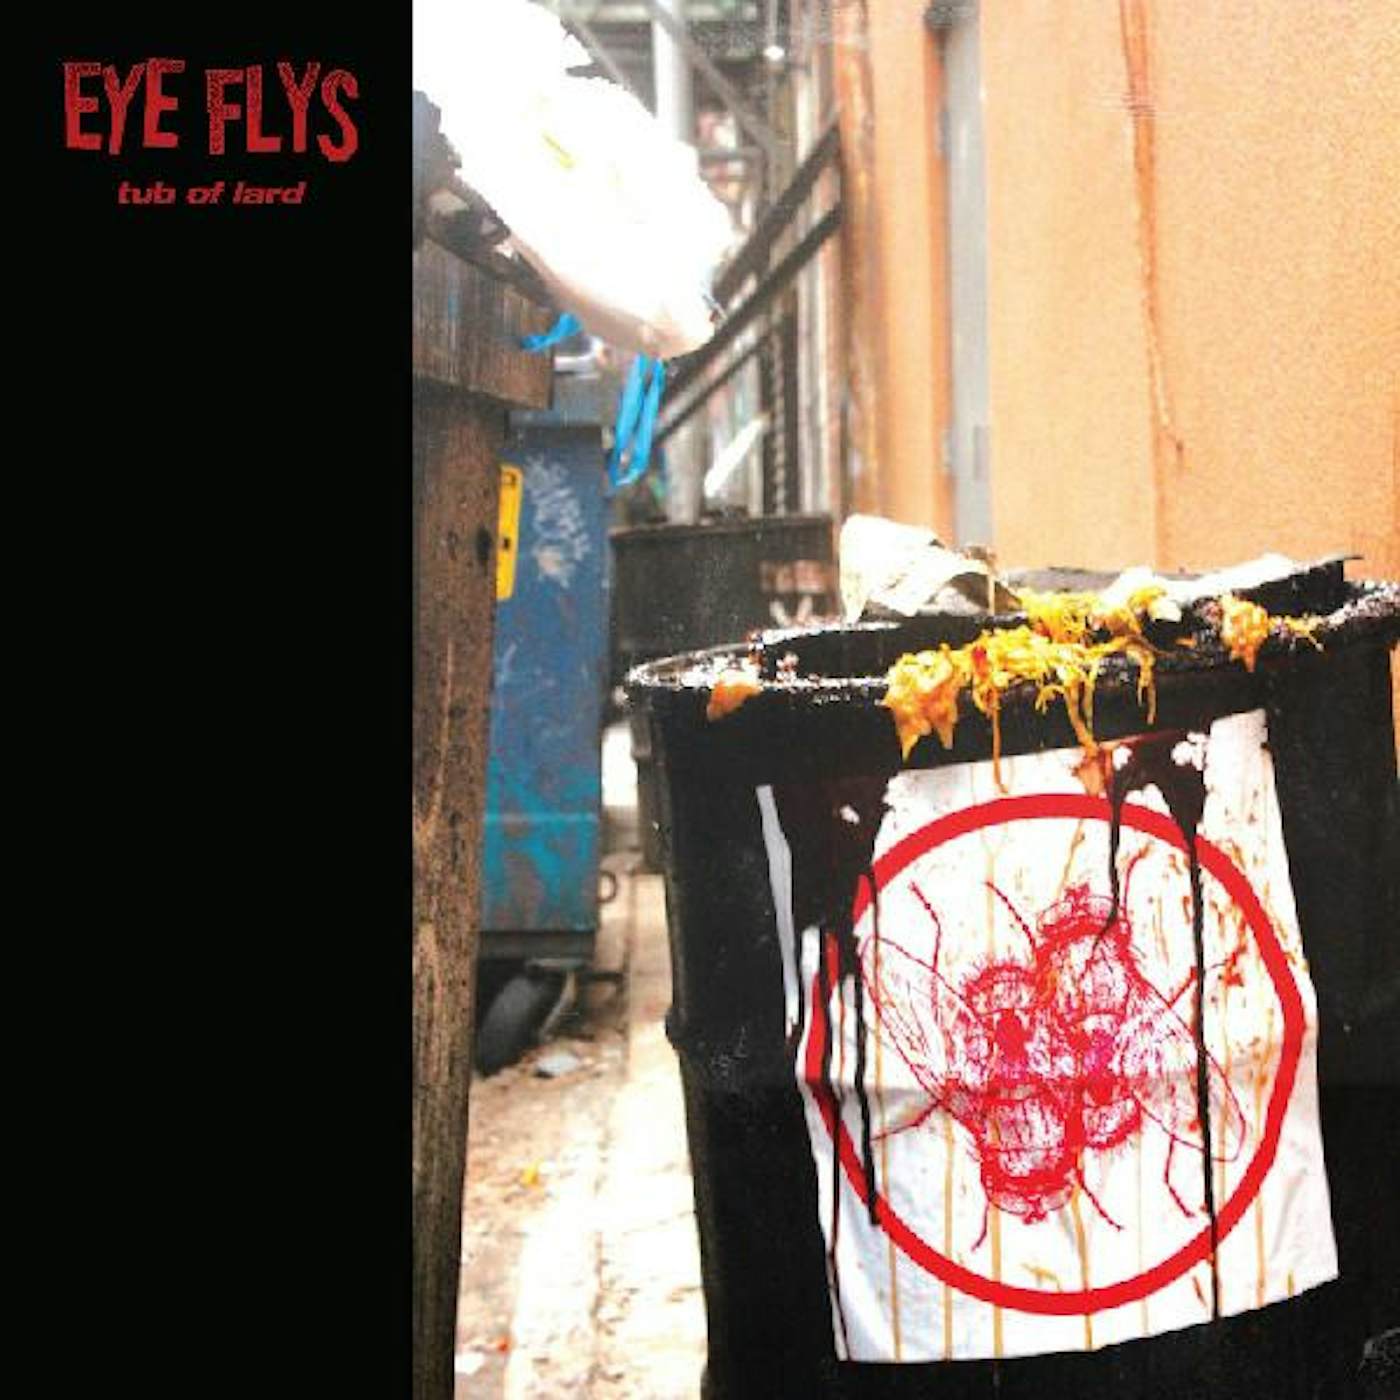 Eye Flys TUB OF LARD CD